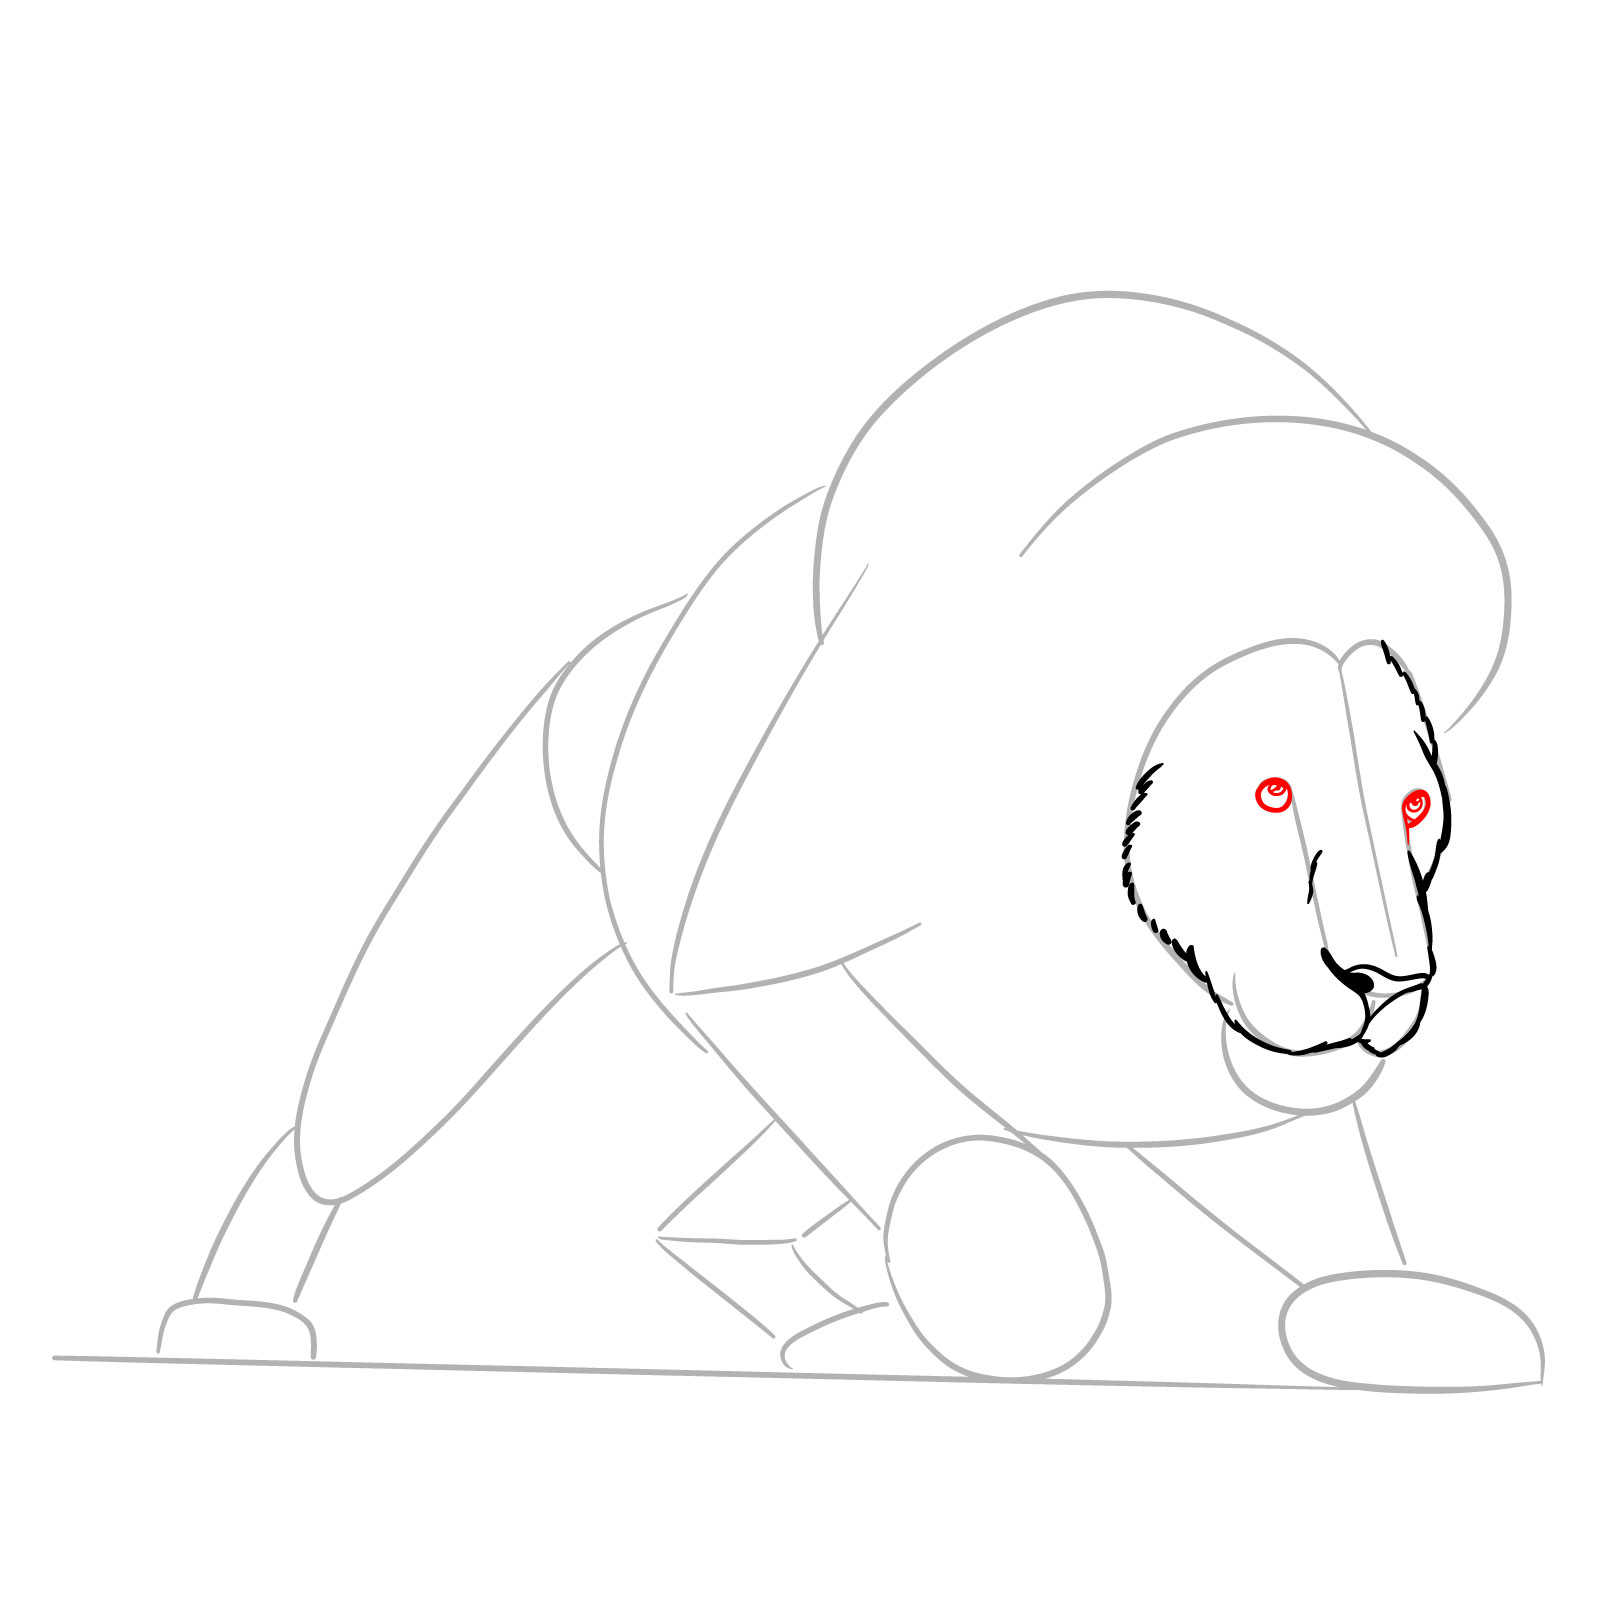 Hunting lion drawing - Step 6: Eyes detailing